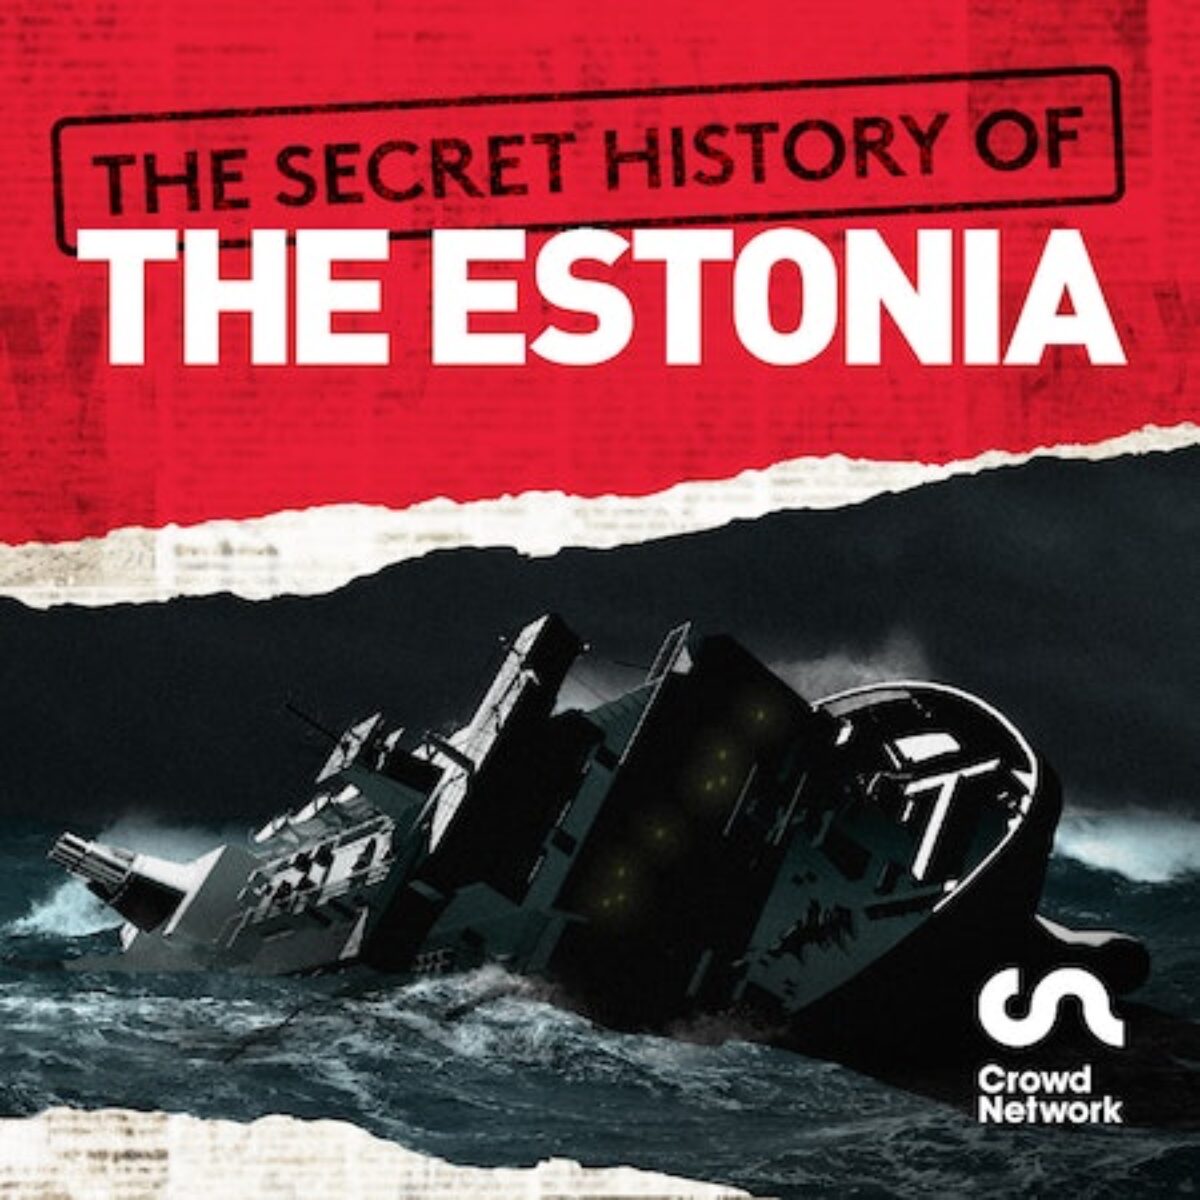 The Secret History of Estonia podcast